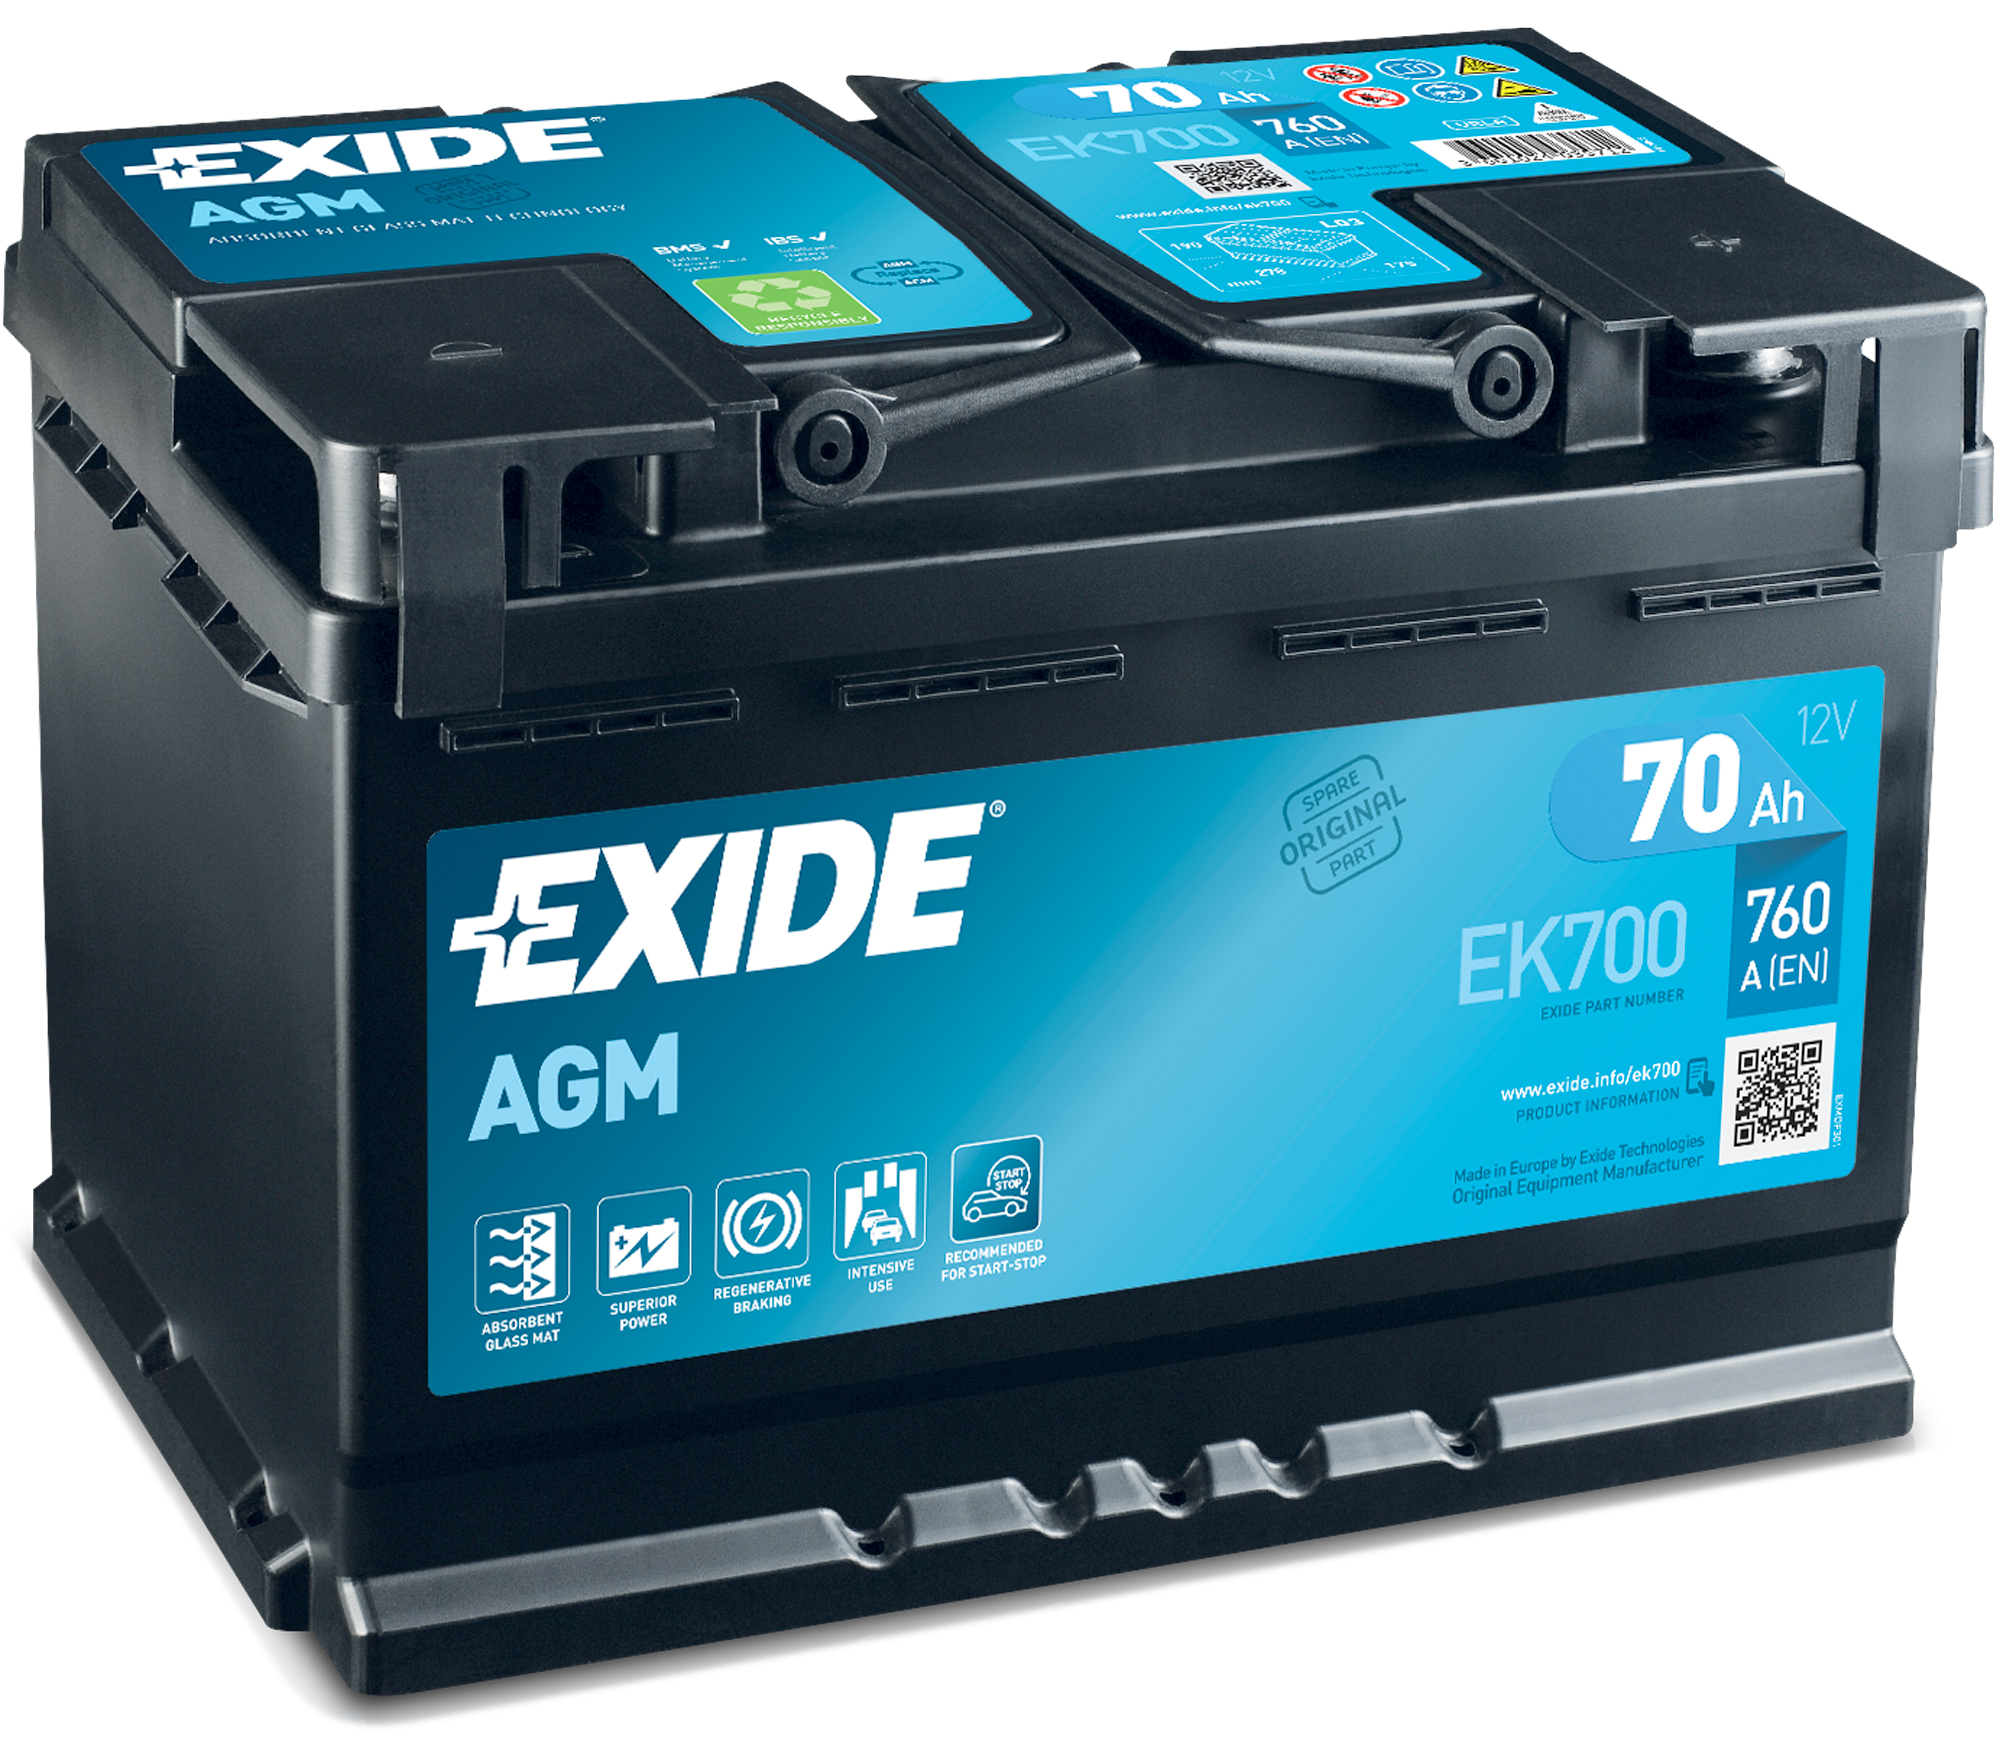 Аккумулятор EXIDE автомобильный AGM 70Ah 760A (EN) AGM EXIDE EK700